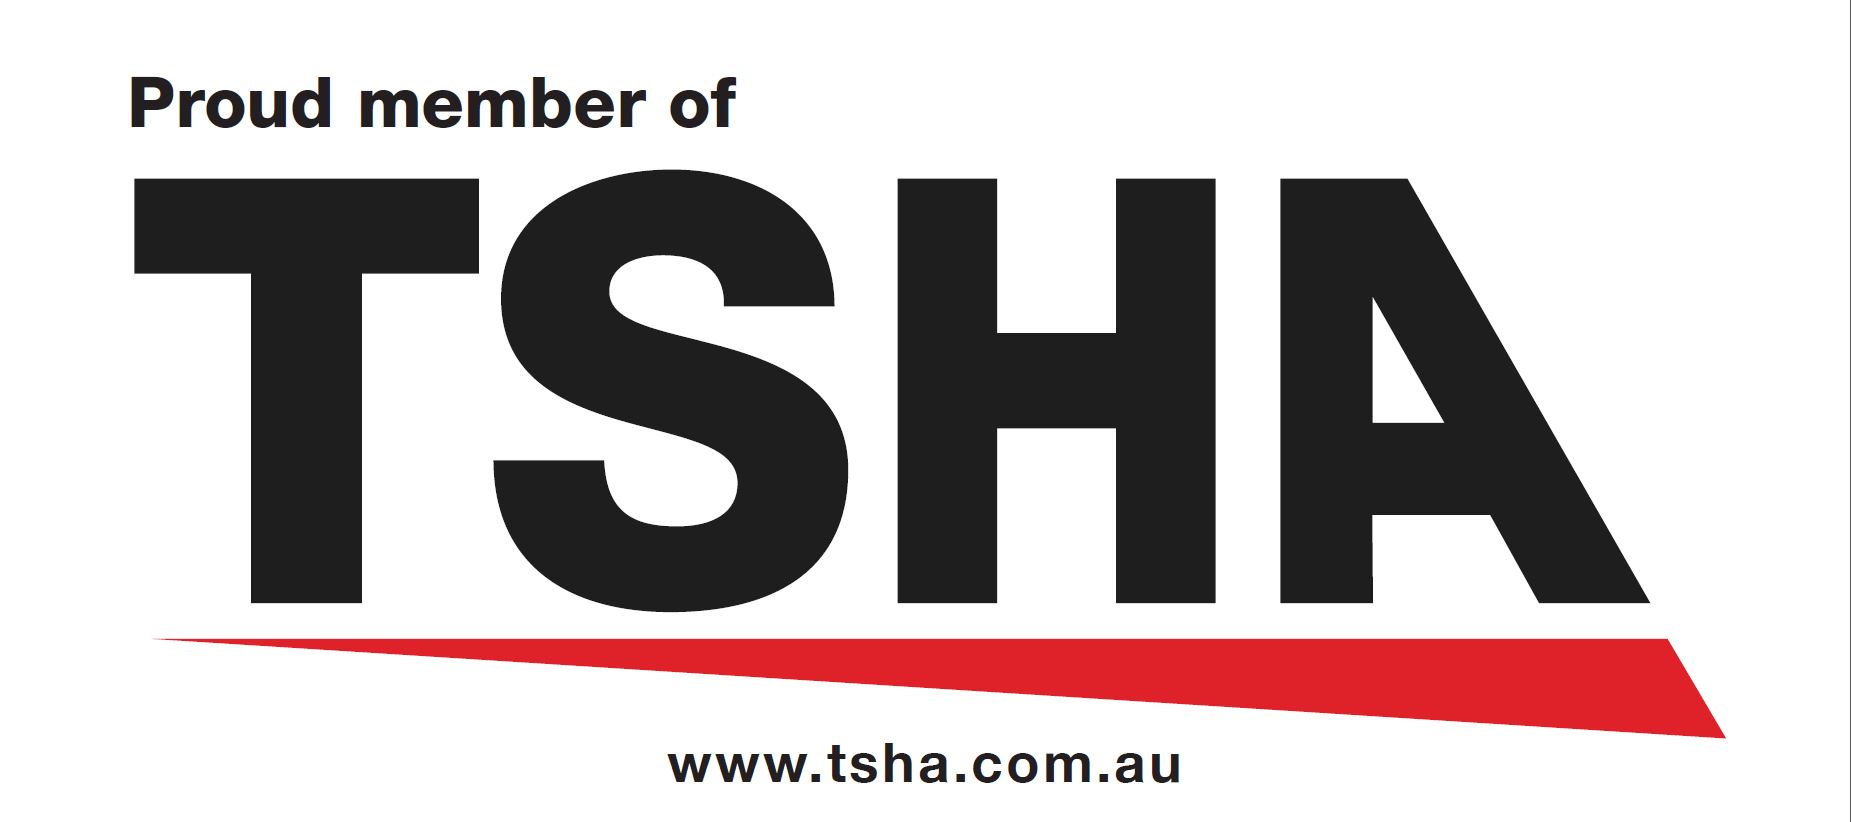 TSHA proud member logo